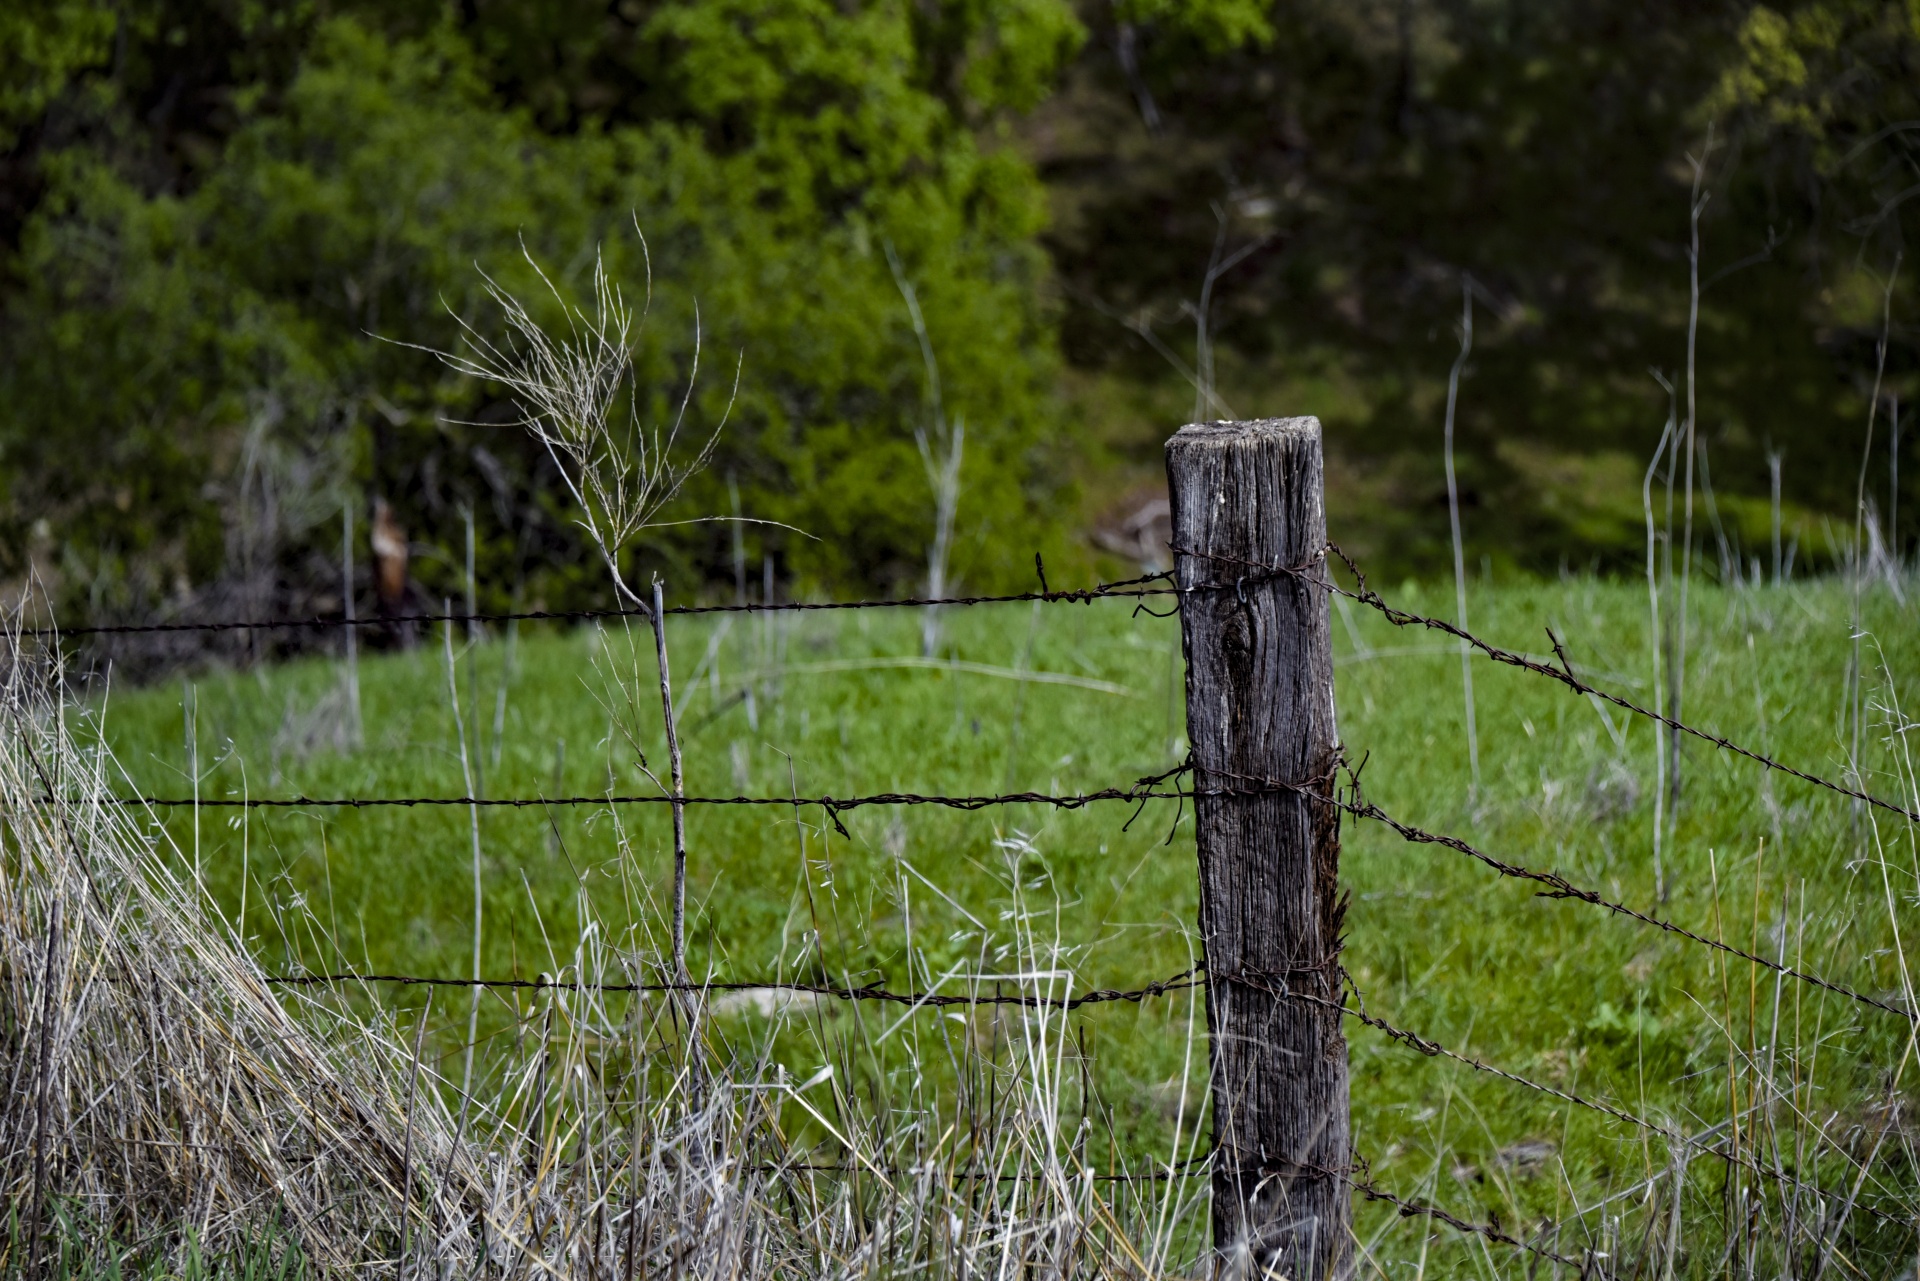 Wood Fence Post